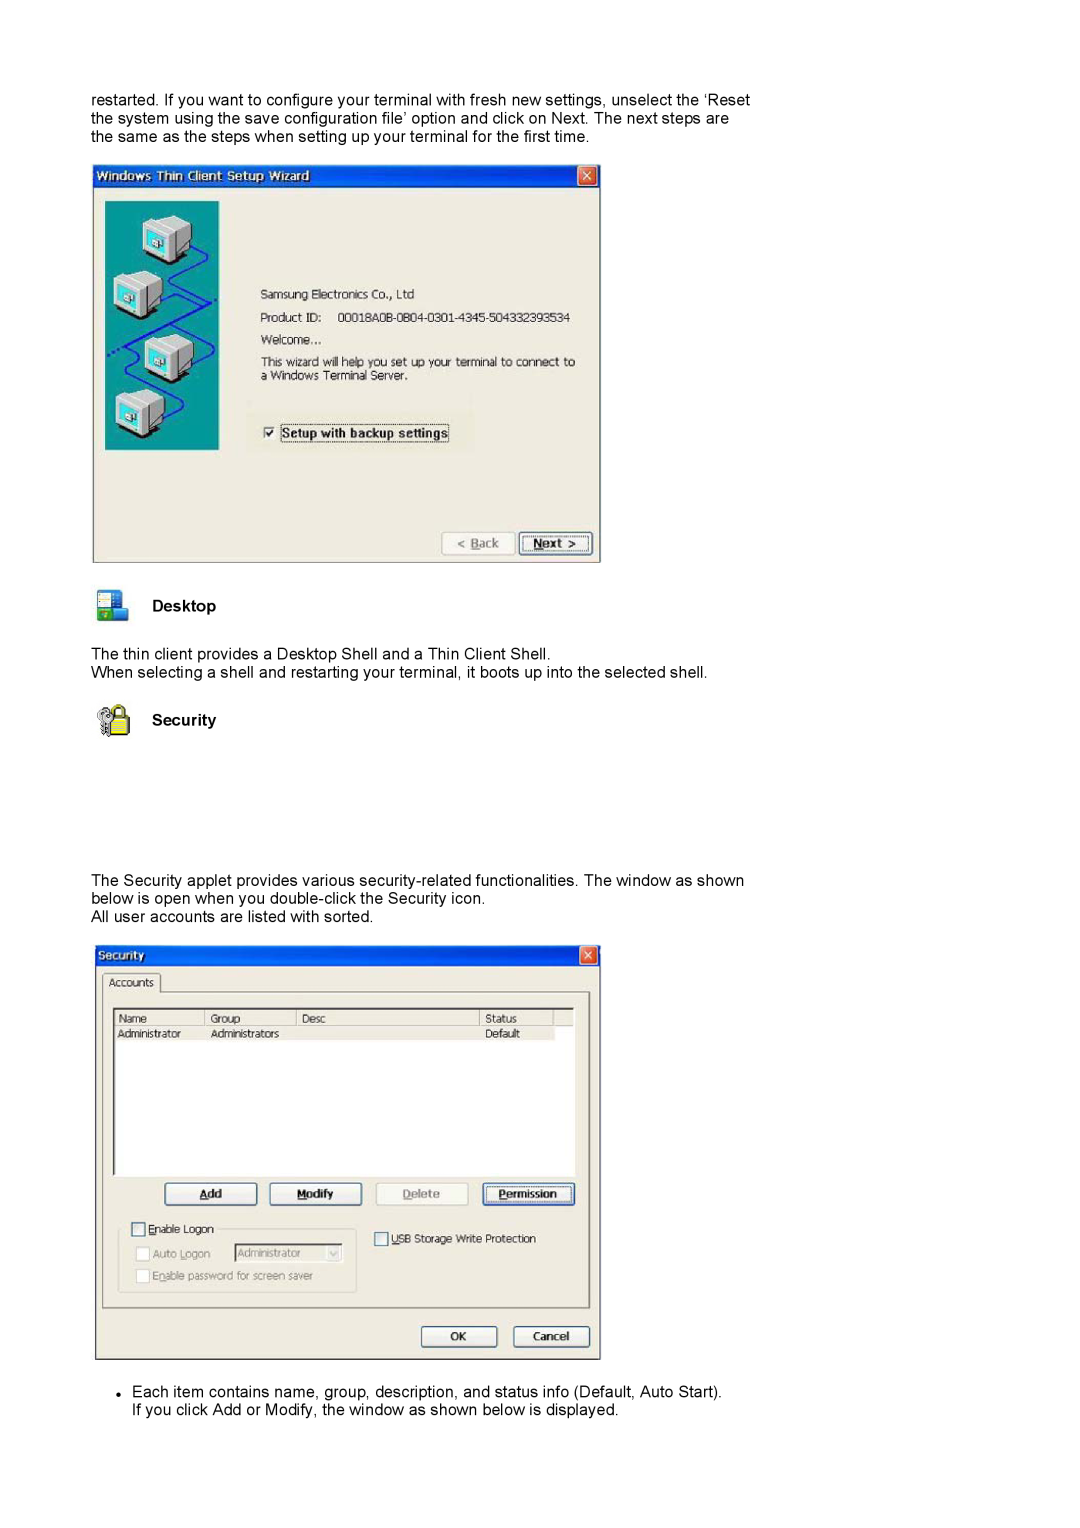 Samsung 710NT manual Desktop, Security 